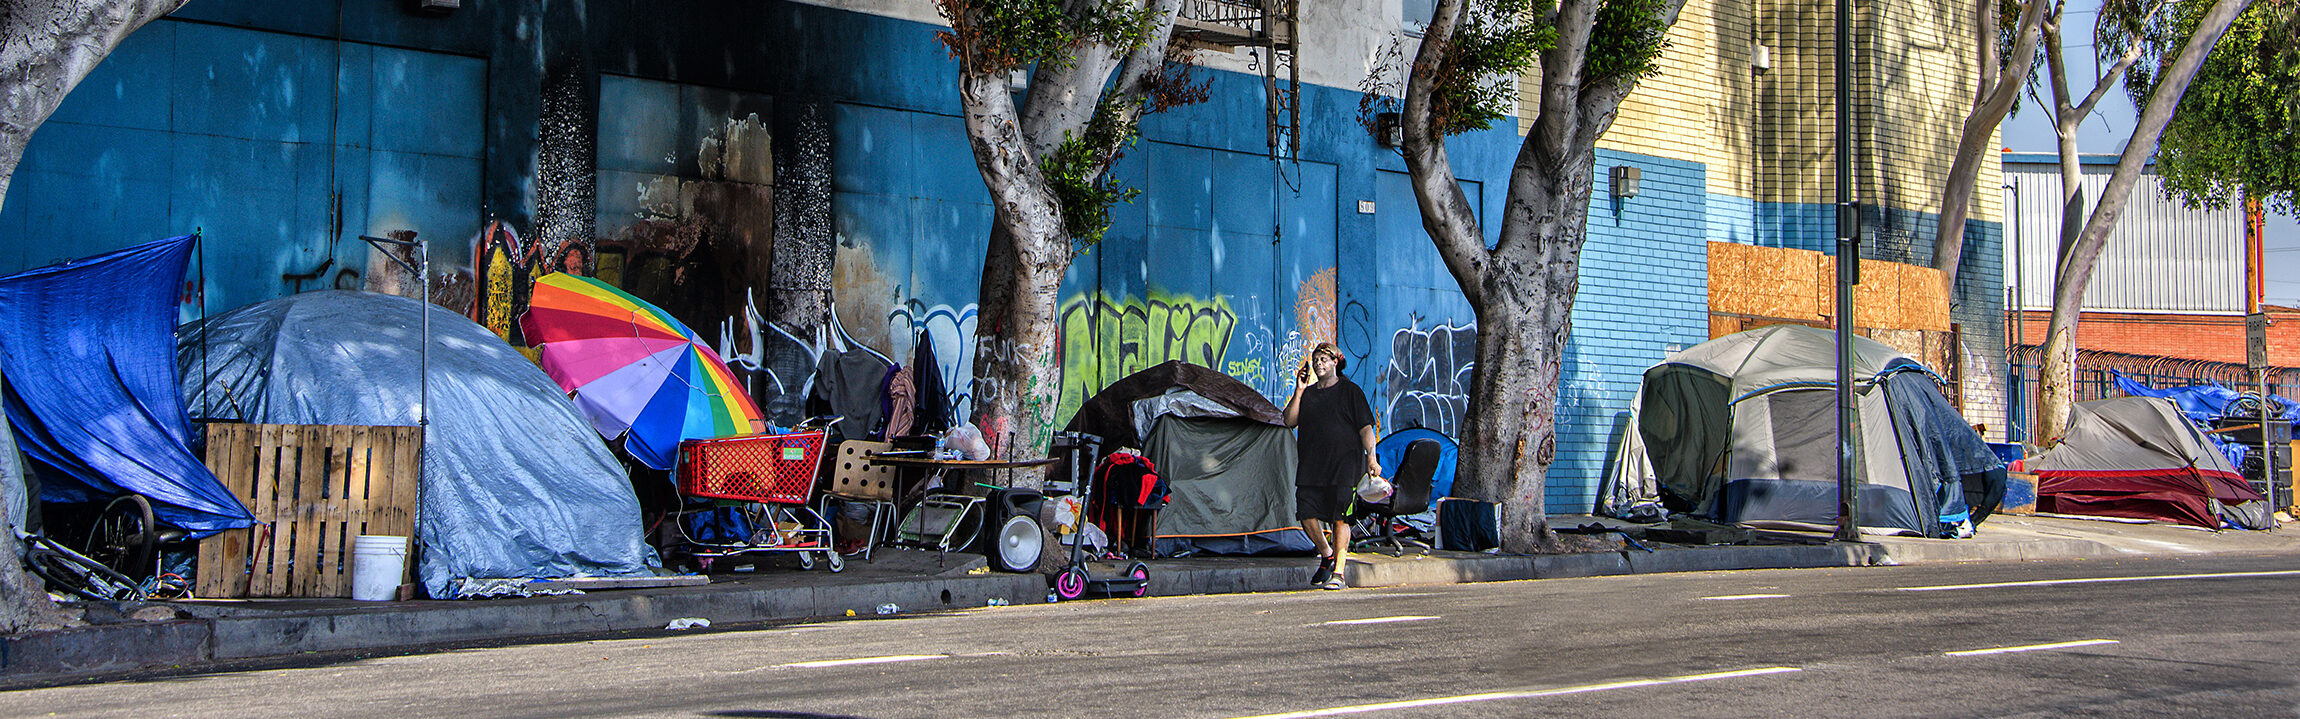 essay on homelessness in california